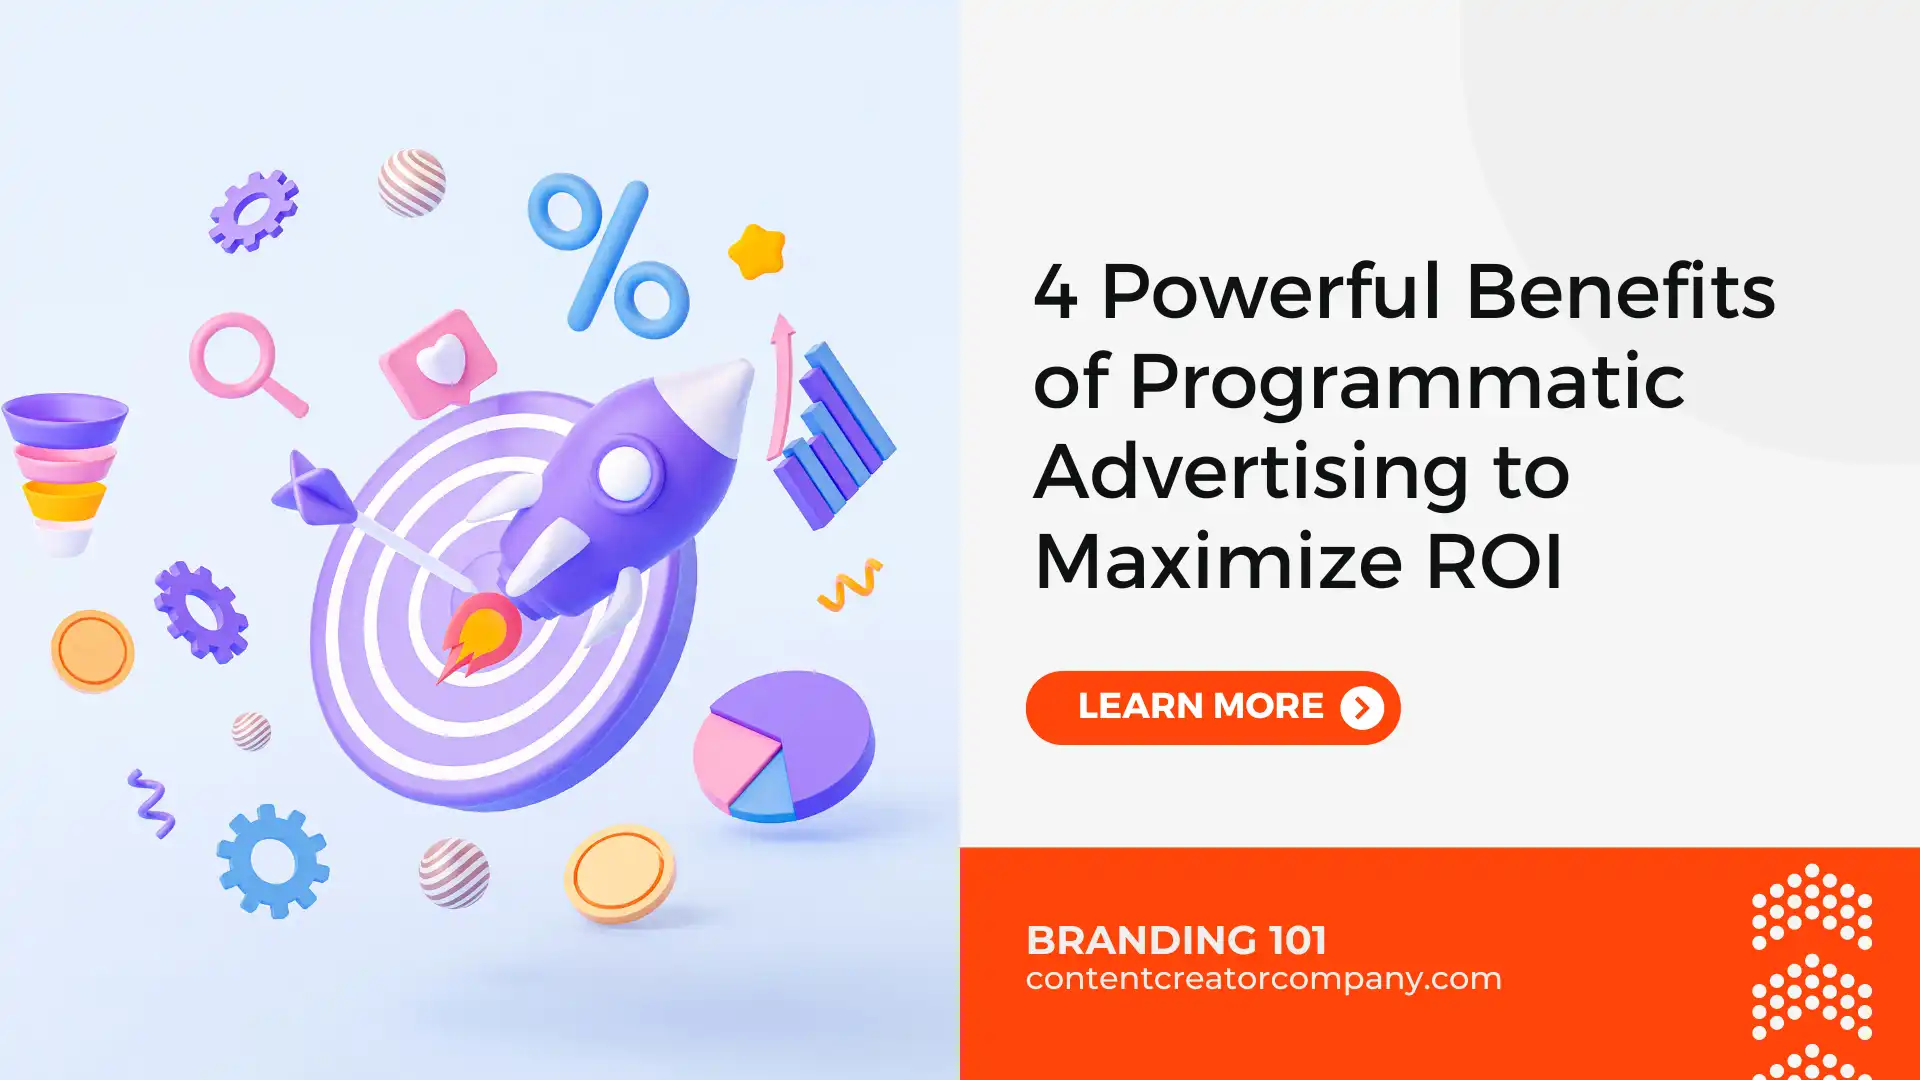 4 Powerful Benefits of Programmatic Advertising to Maximize ROI